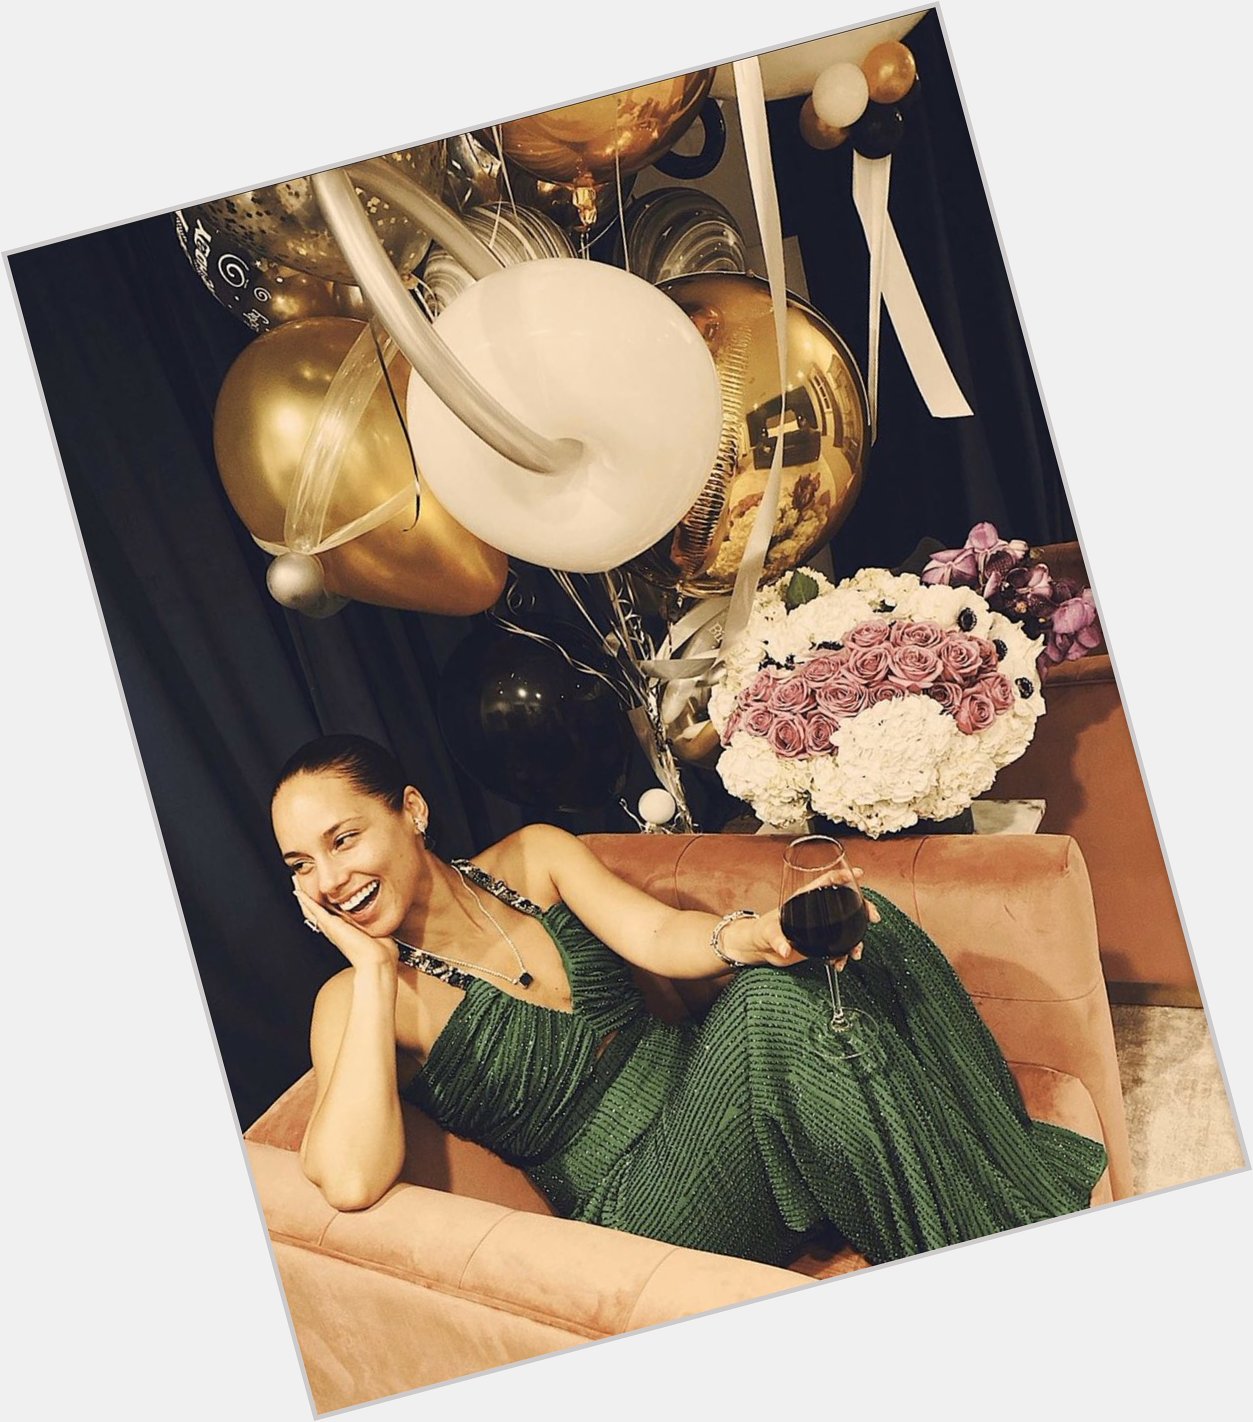 [ BIRTHDAY GIRL]
Hier 25.01.2020 la chanteuse Alicia Keys a fêté ses 39 ans, happy birthday girl ! 